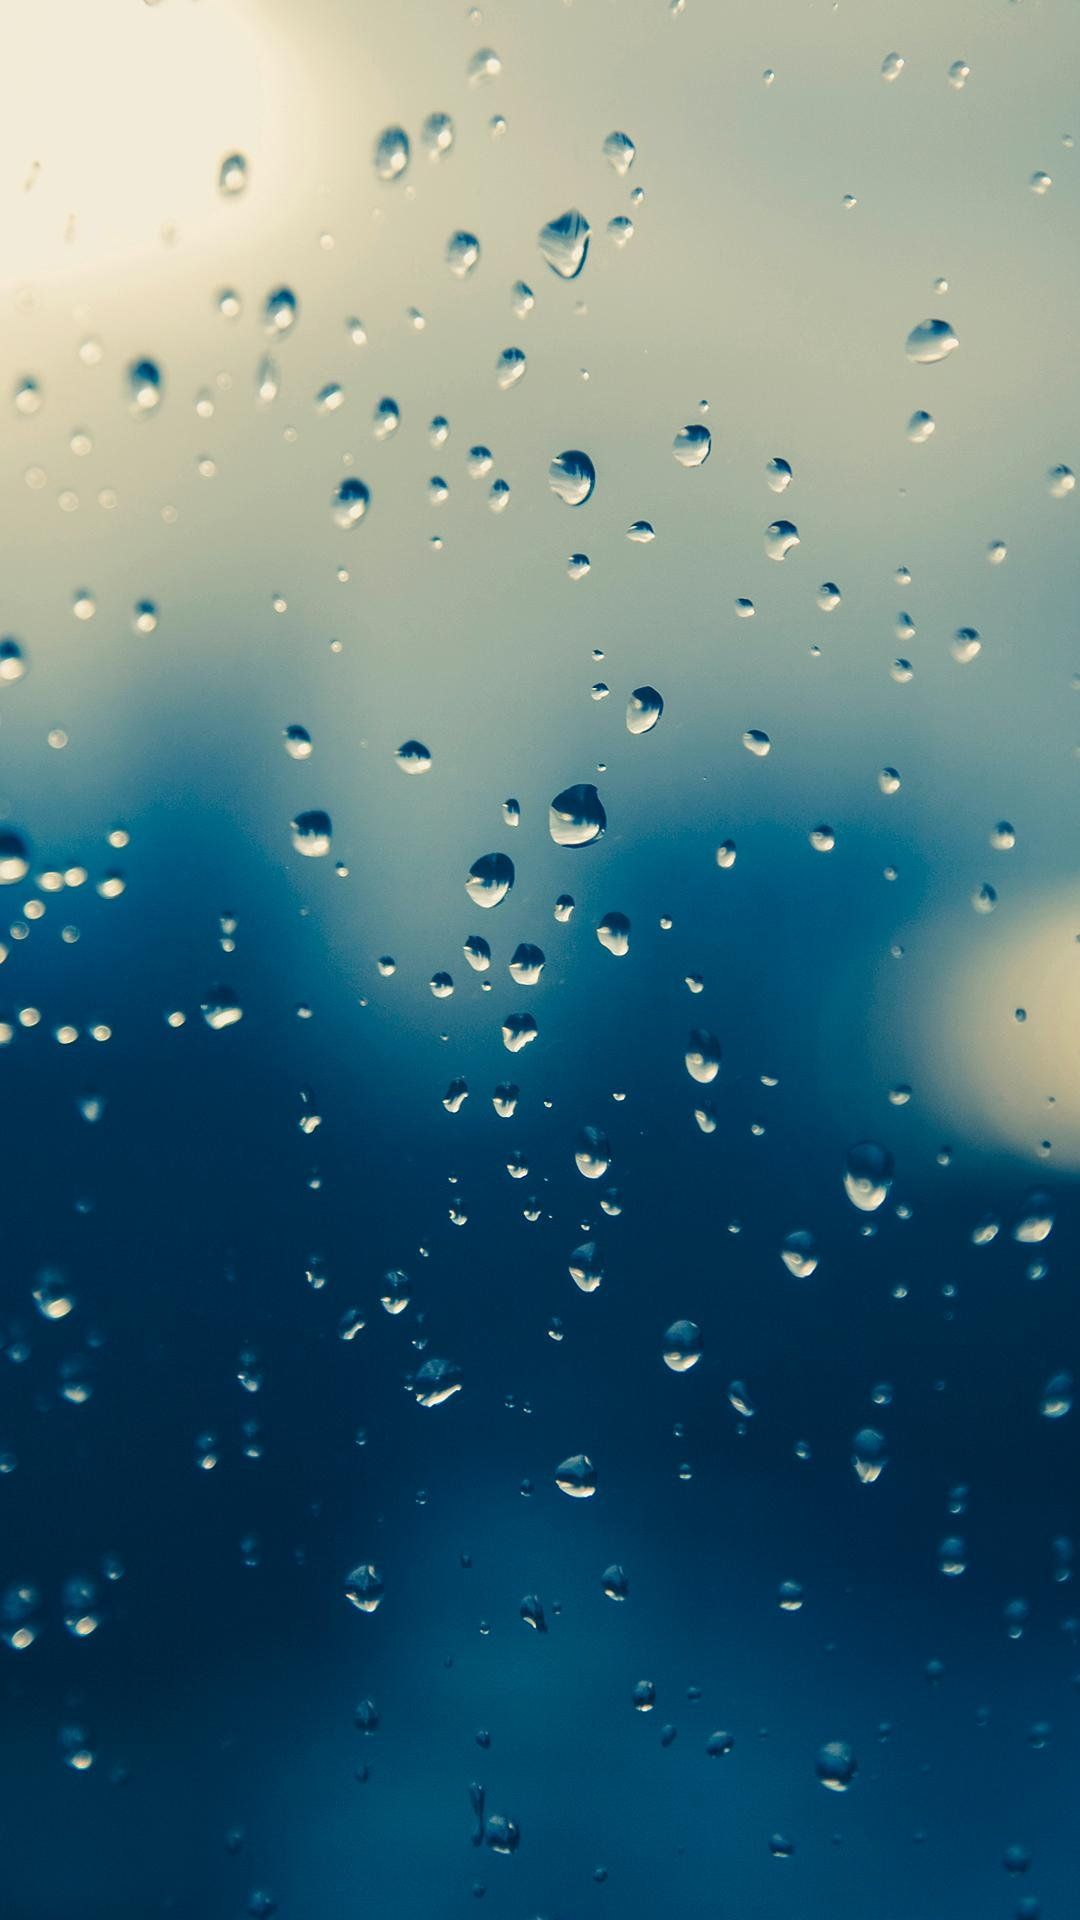 A close up of raindrops on the window - Rain